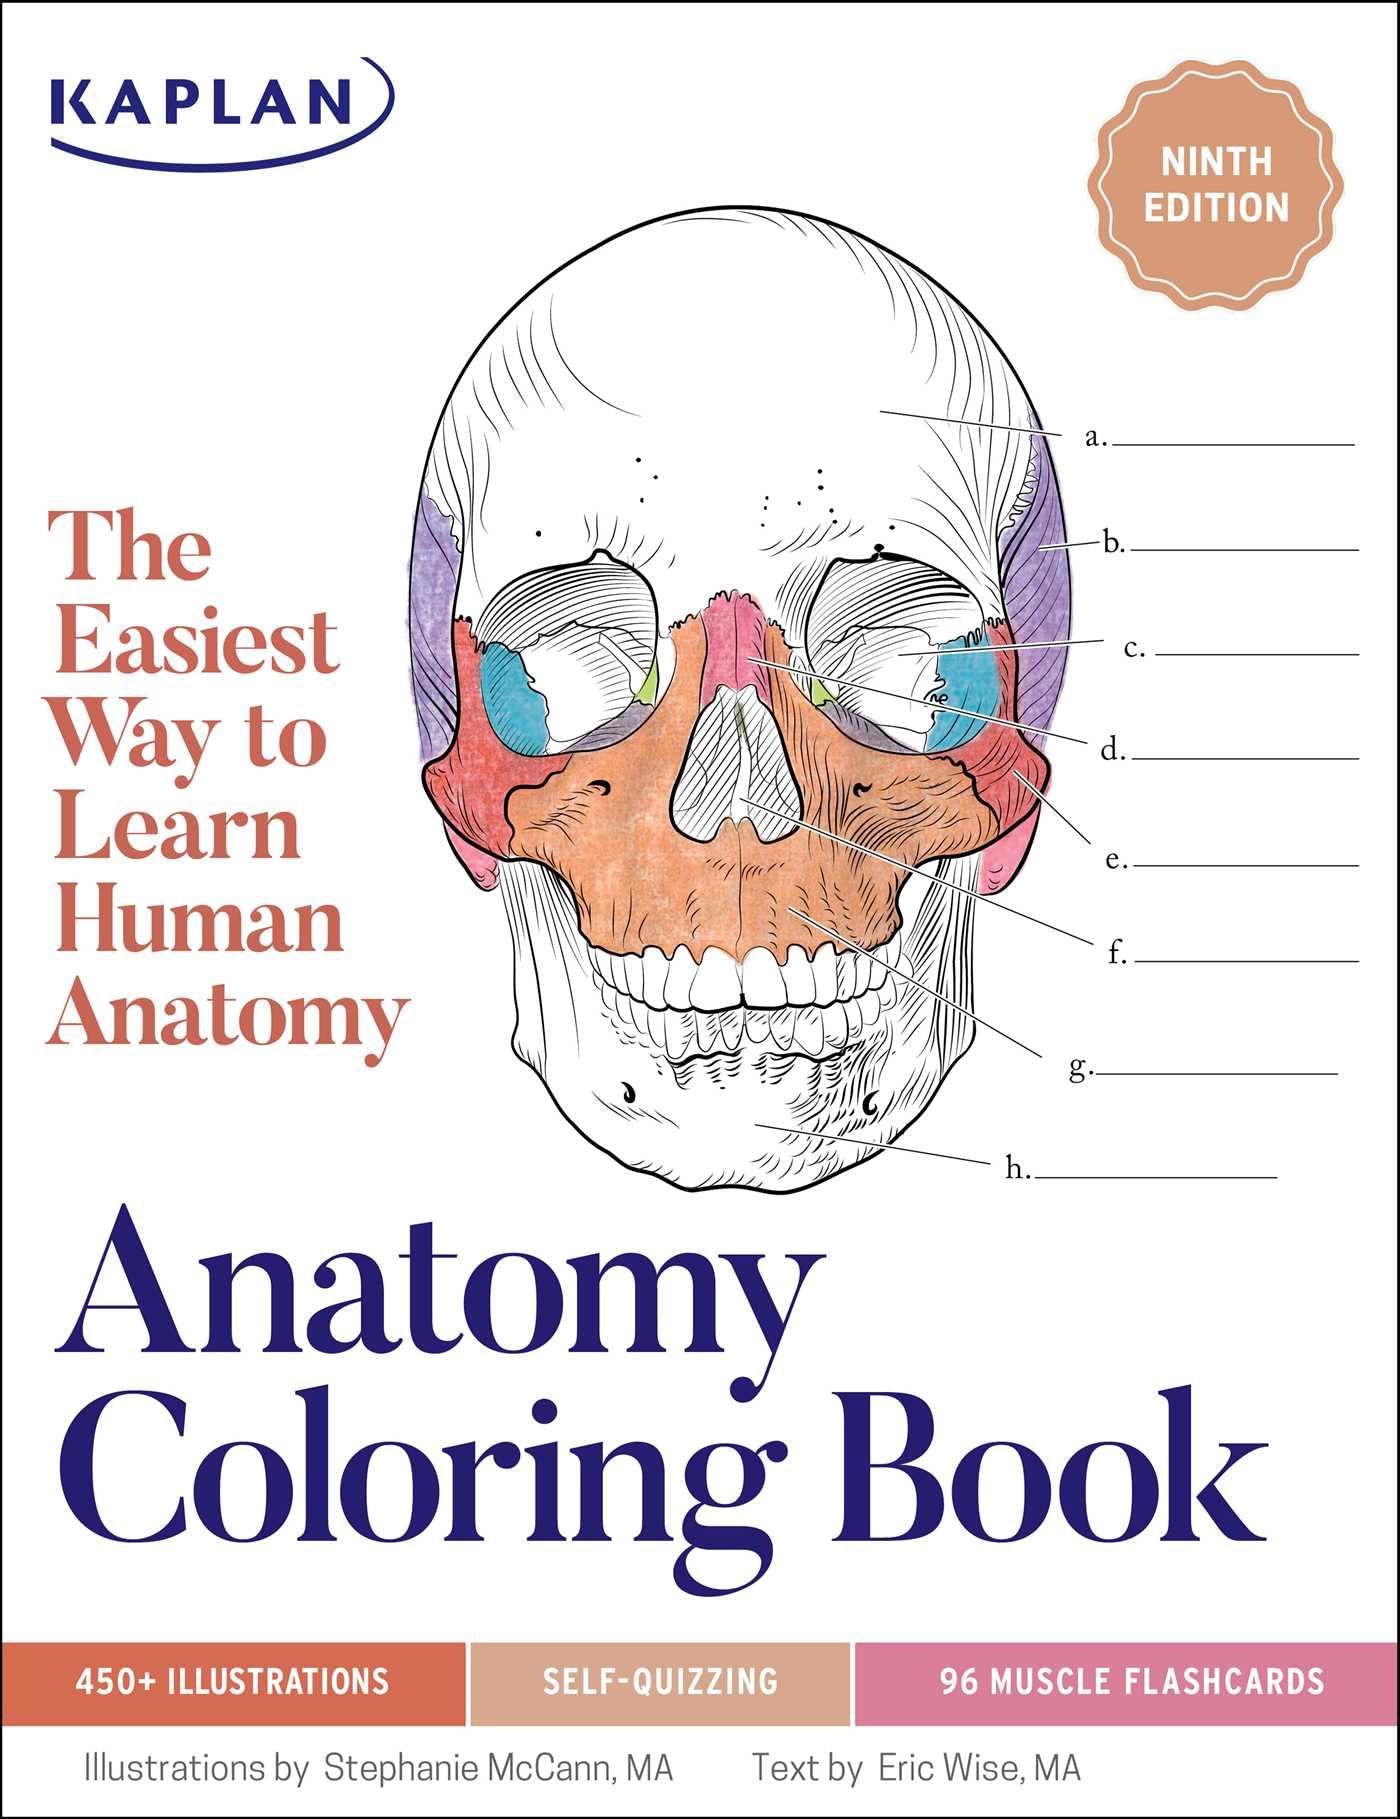 Anatomy Coloring Book by McCann, Stephanie